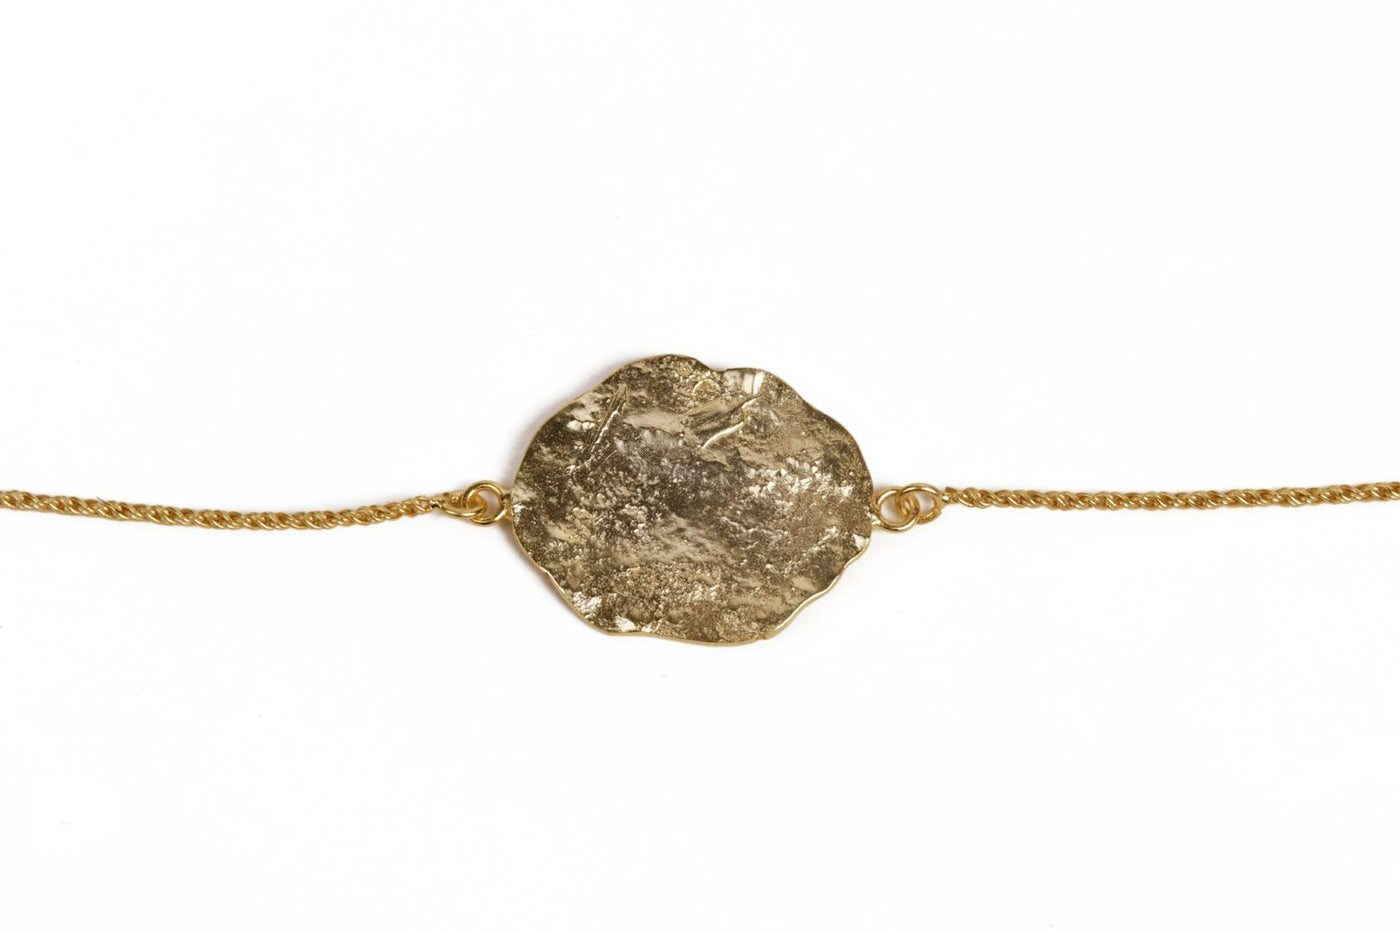 Authentic Hammered Gold Bracelet - Stilskii